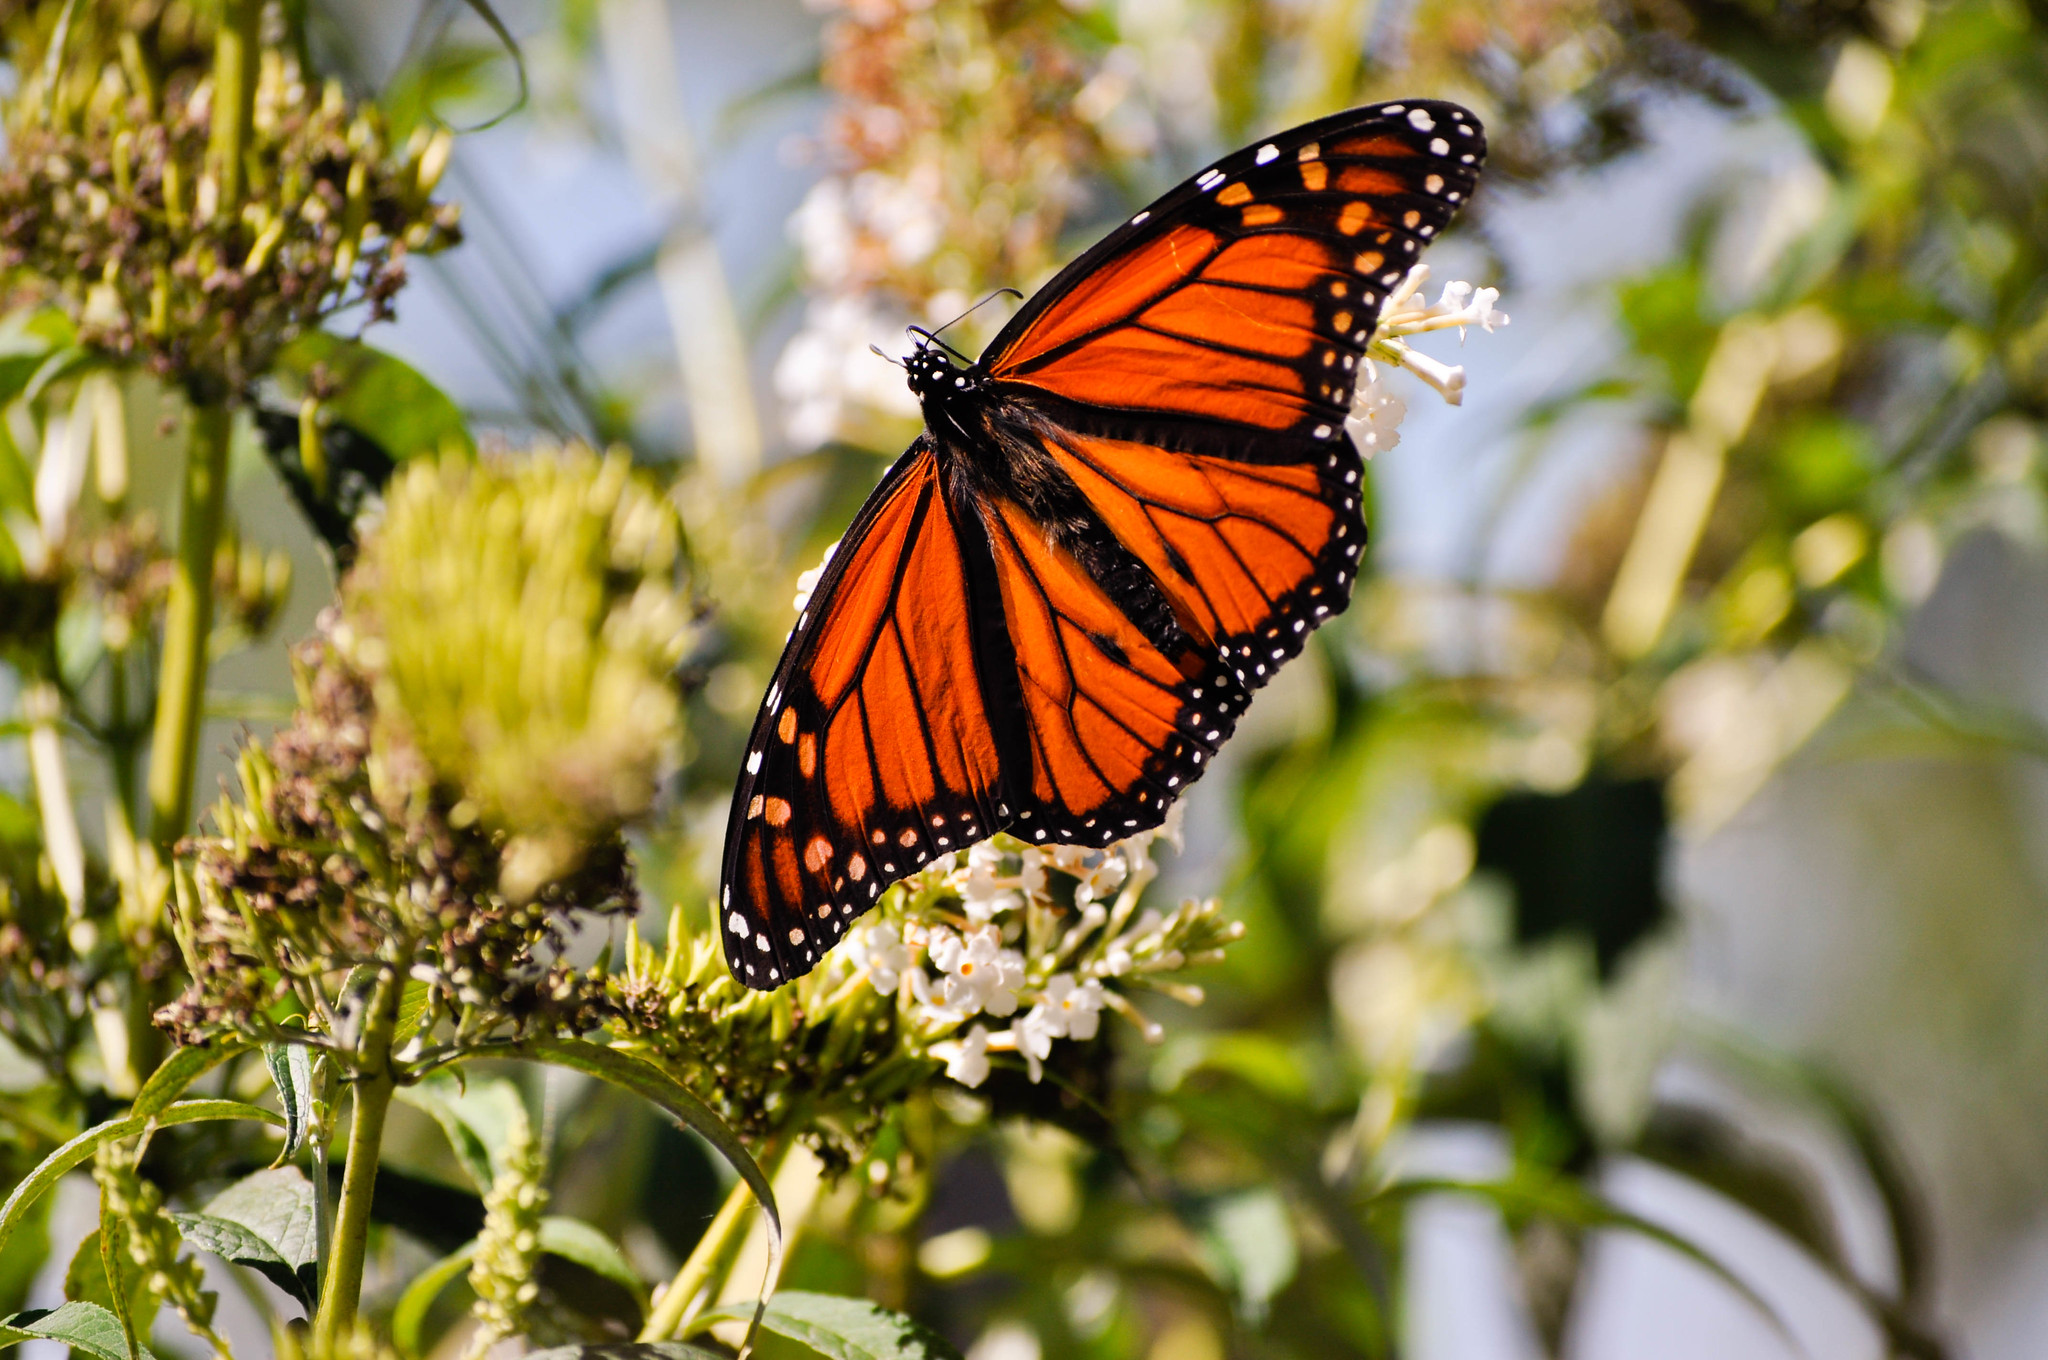 Photo: Monarch Monitoring